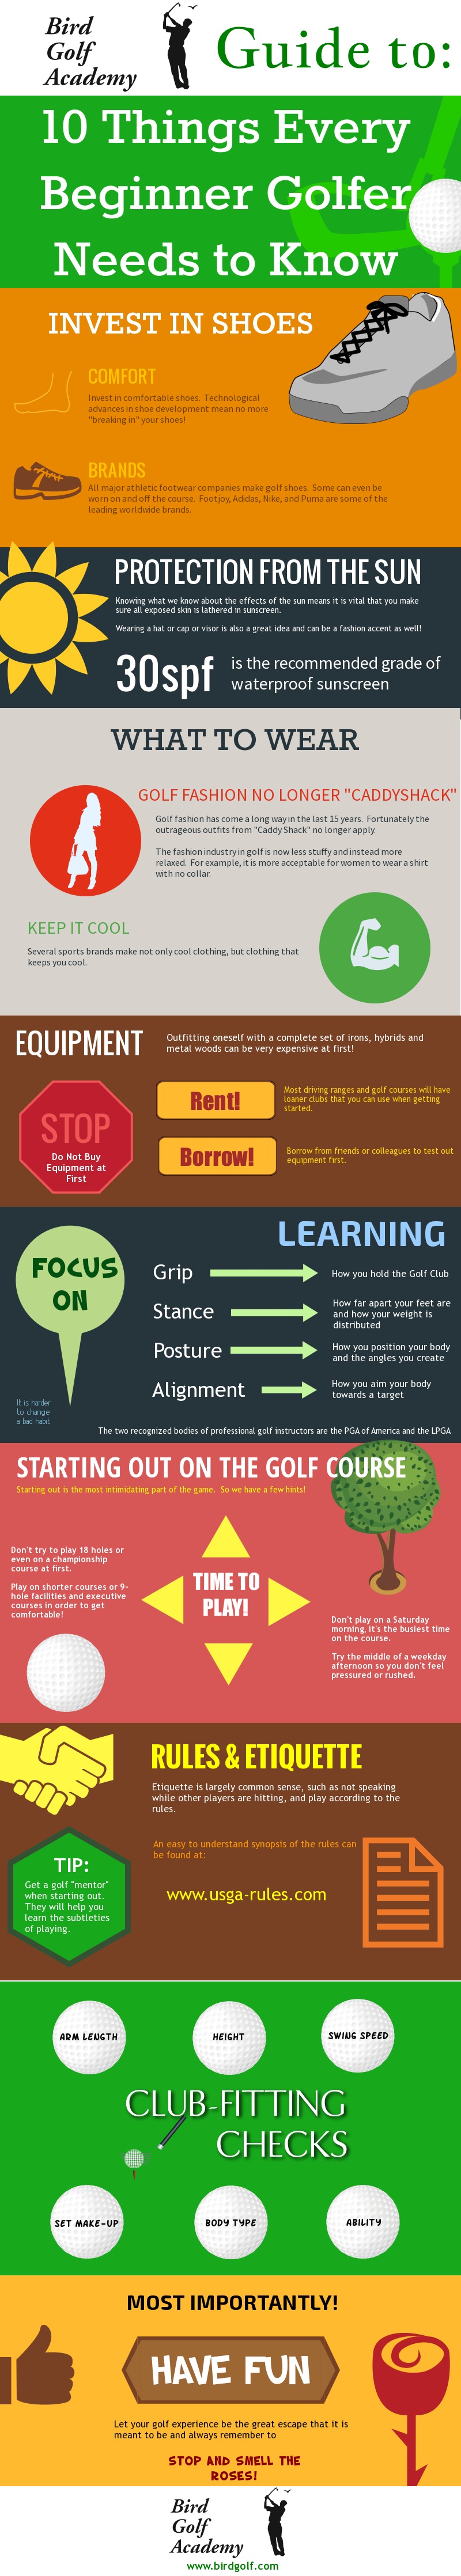 bird-golf-infographic-v3